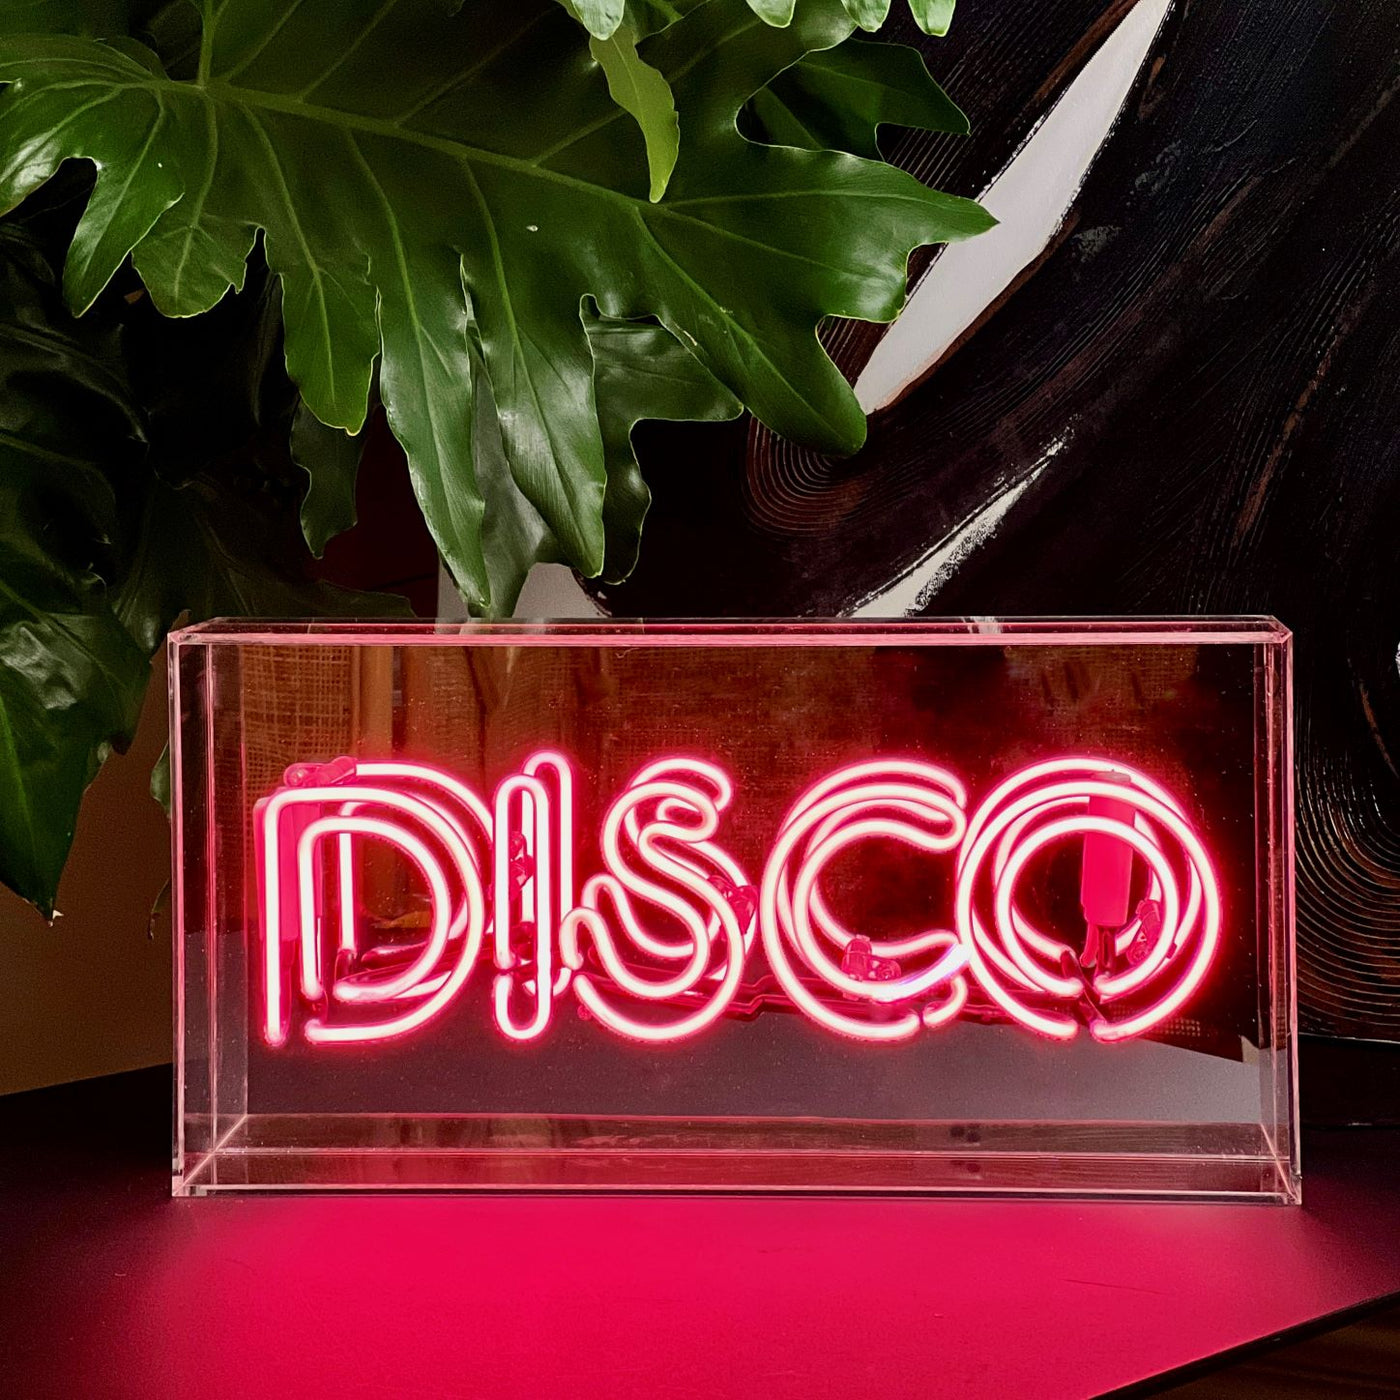 disco-neon-sign-acrylic-light-box-in-pink-Mrs-Robinson